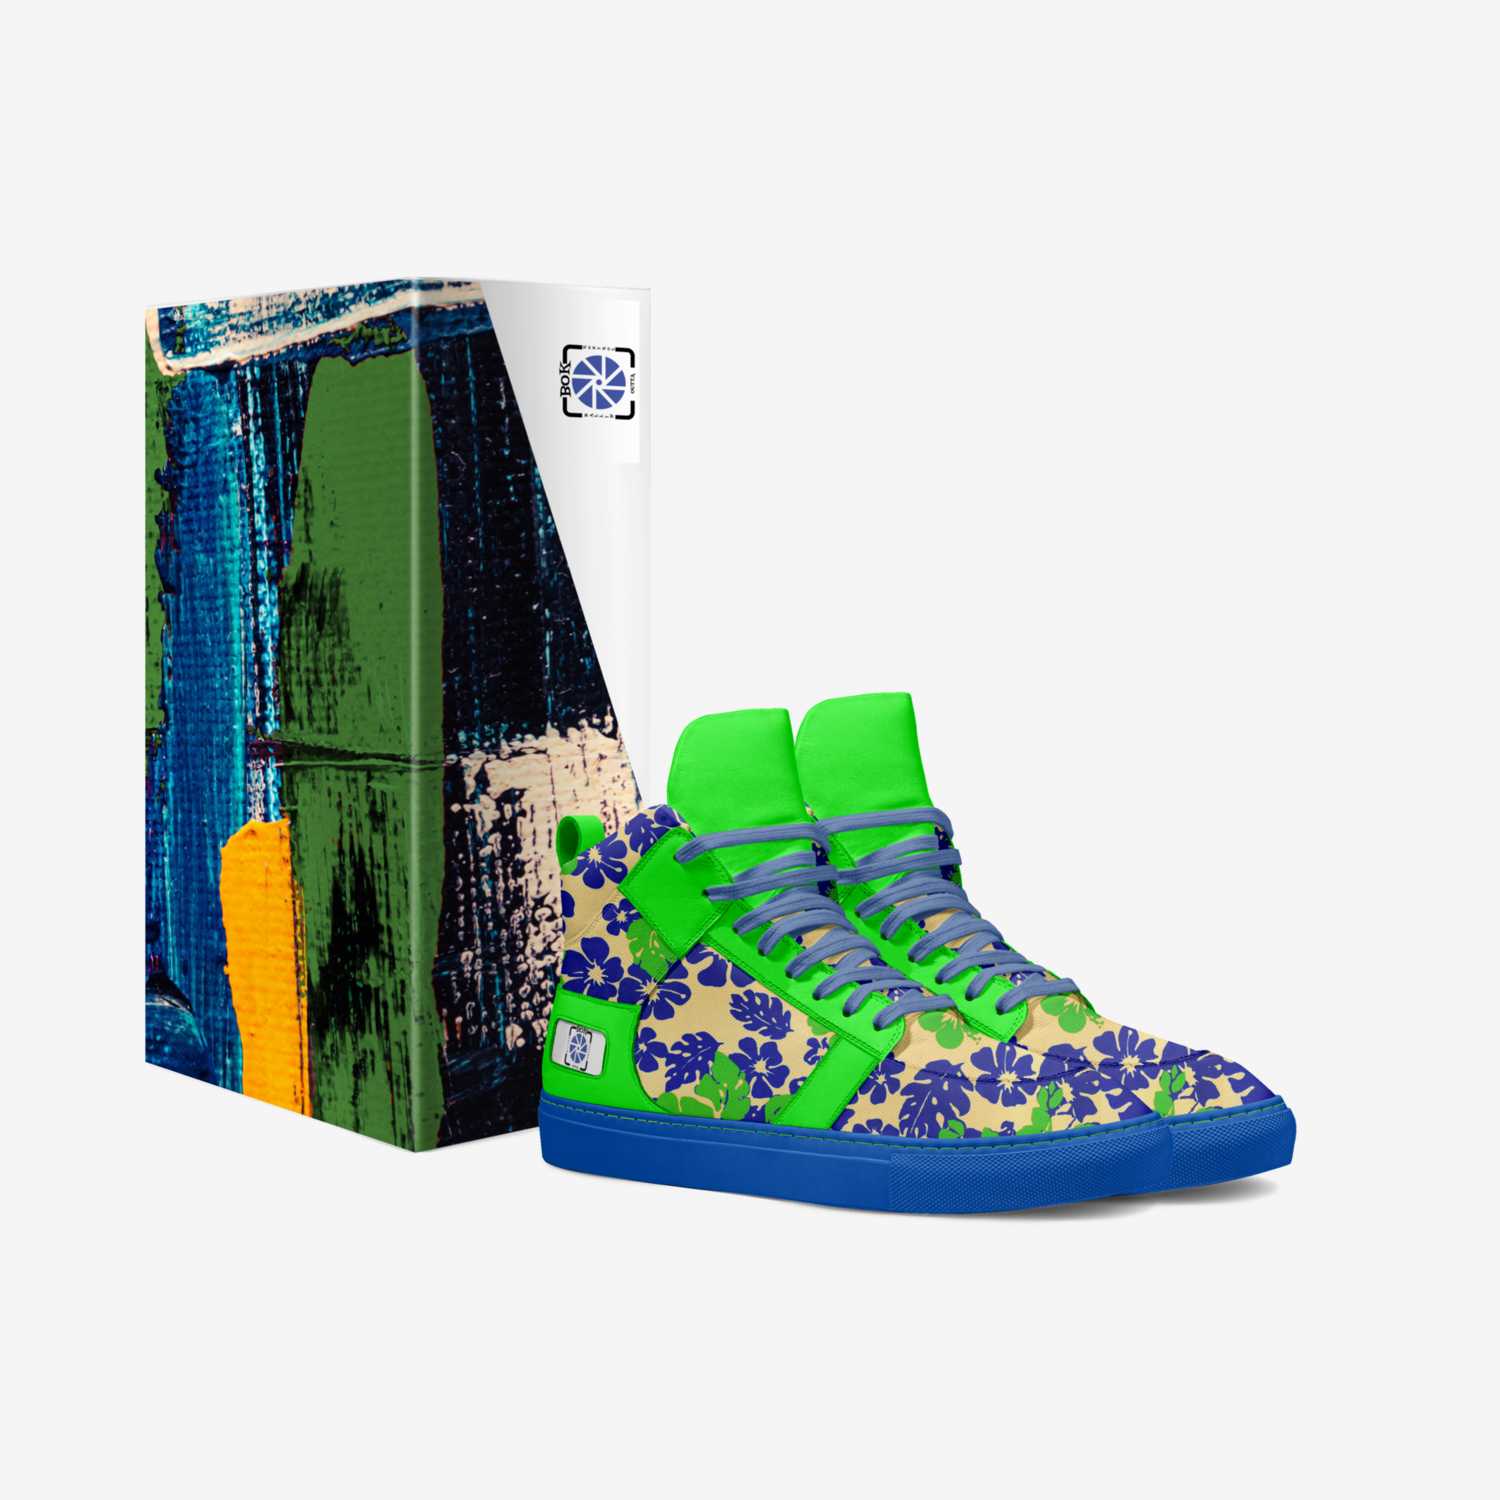 BOK Street custom made in Italy shoes by Garett Harris | Box view